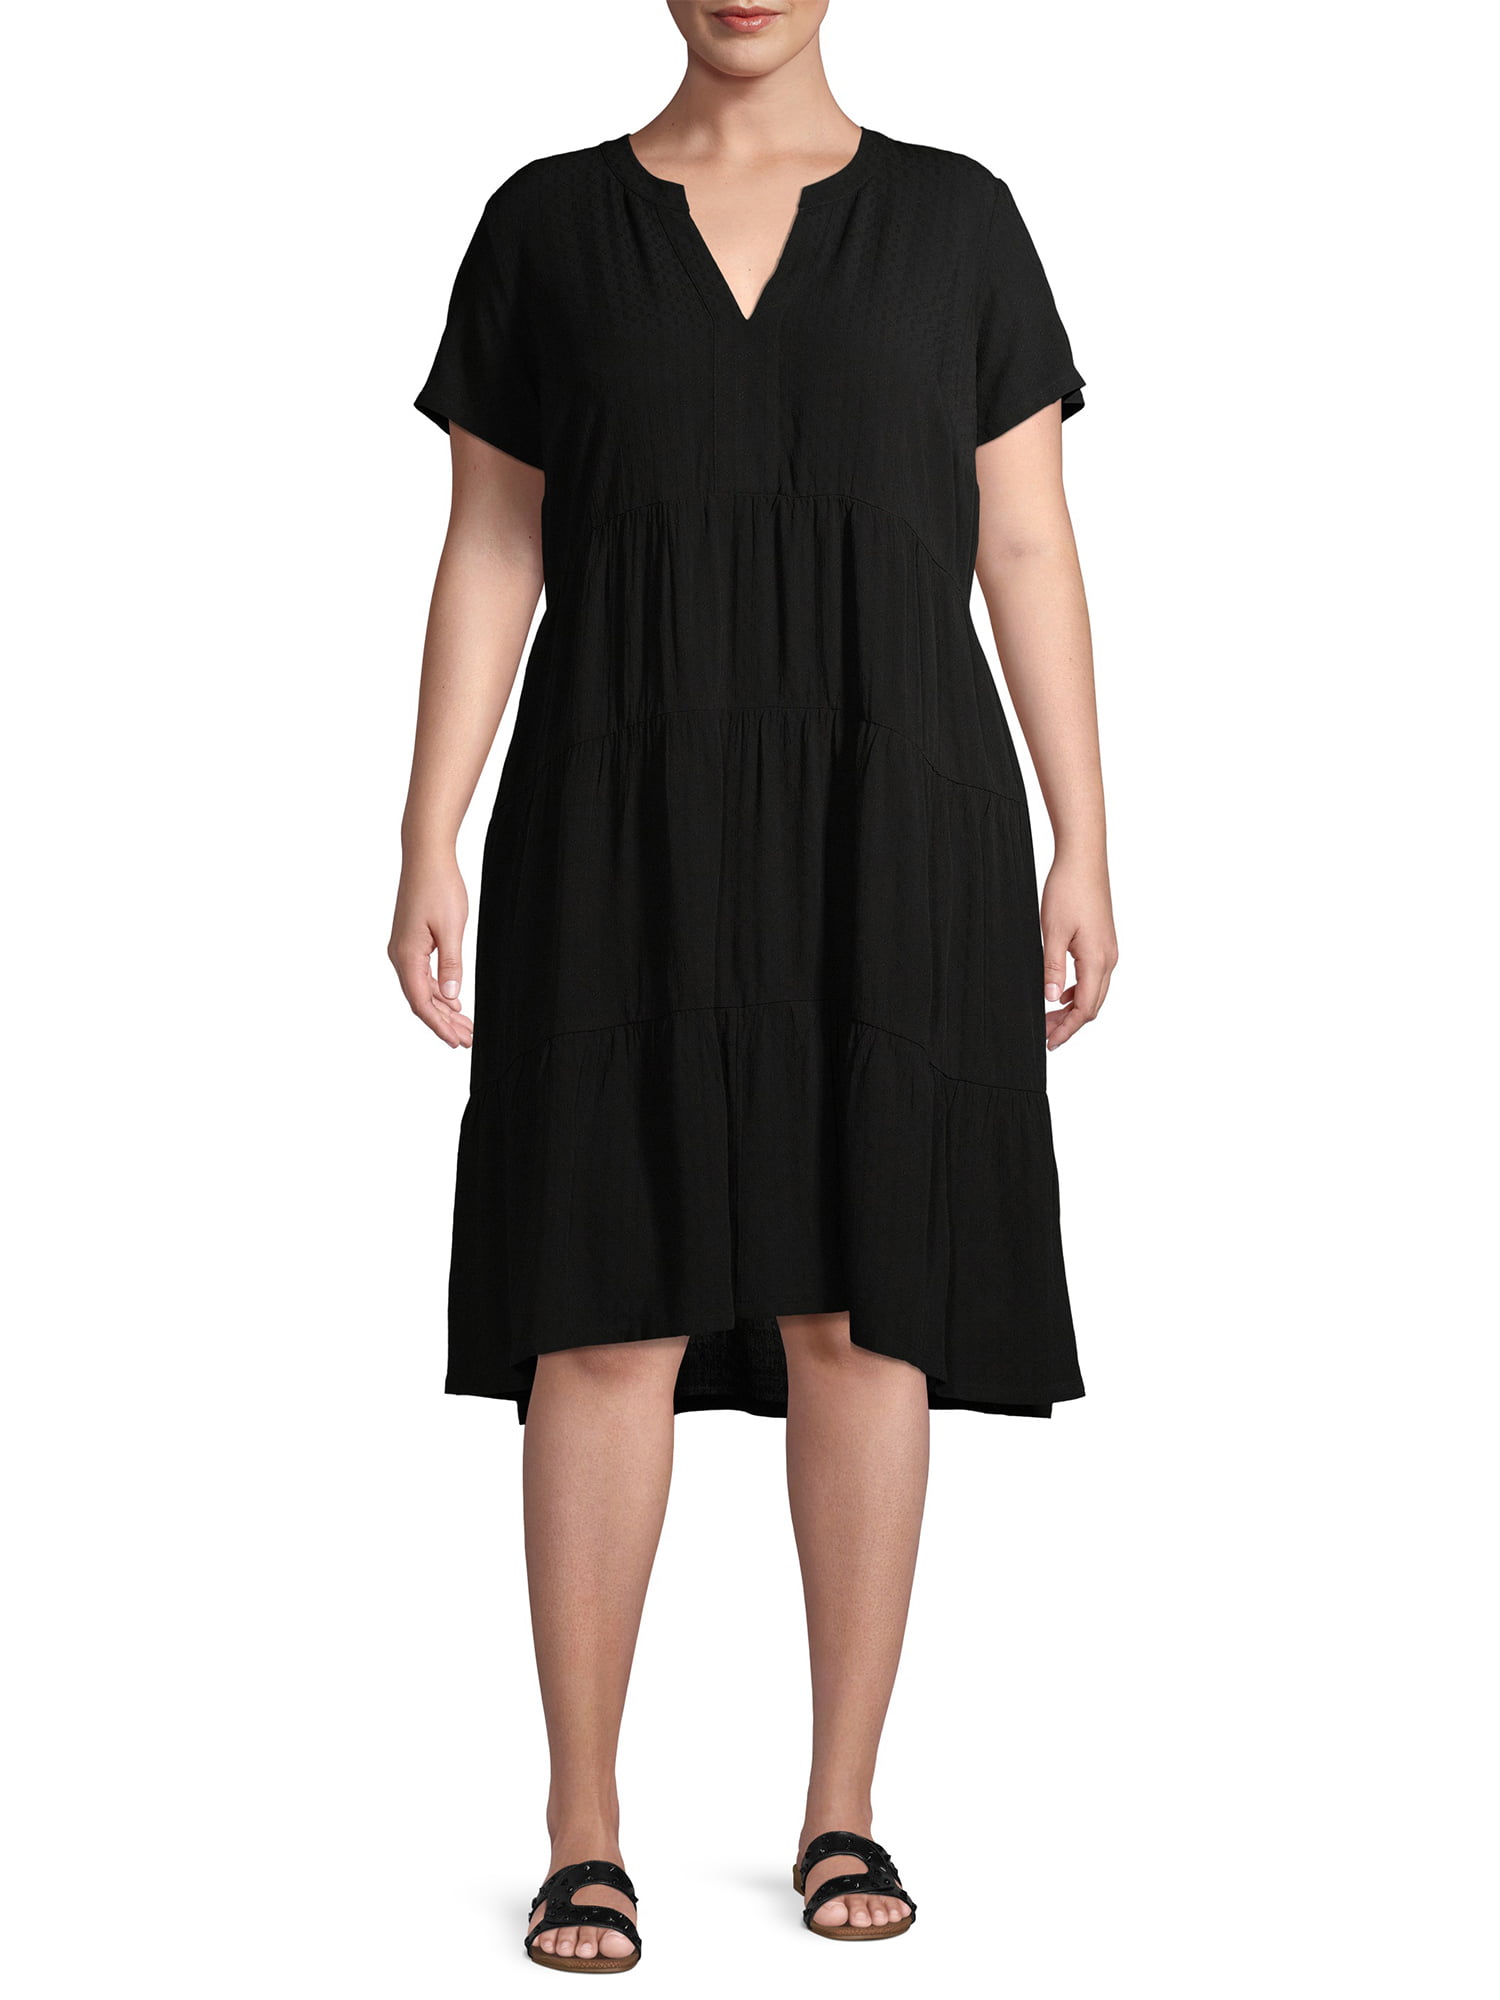 Terra & Sky - Terra & Sky Women's Plus Size Tiered Dress - Walmart.com ...